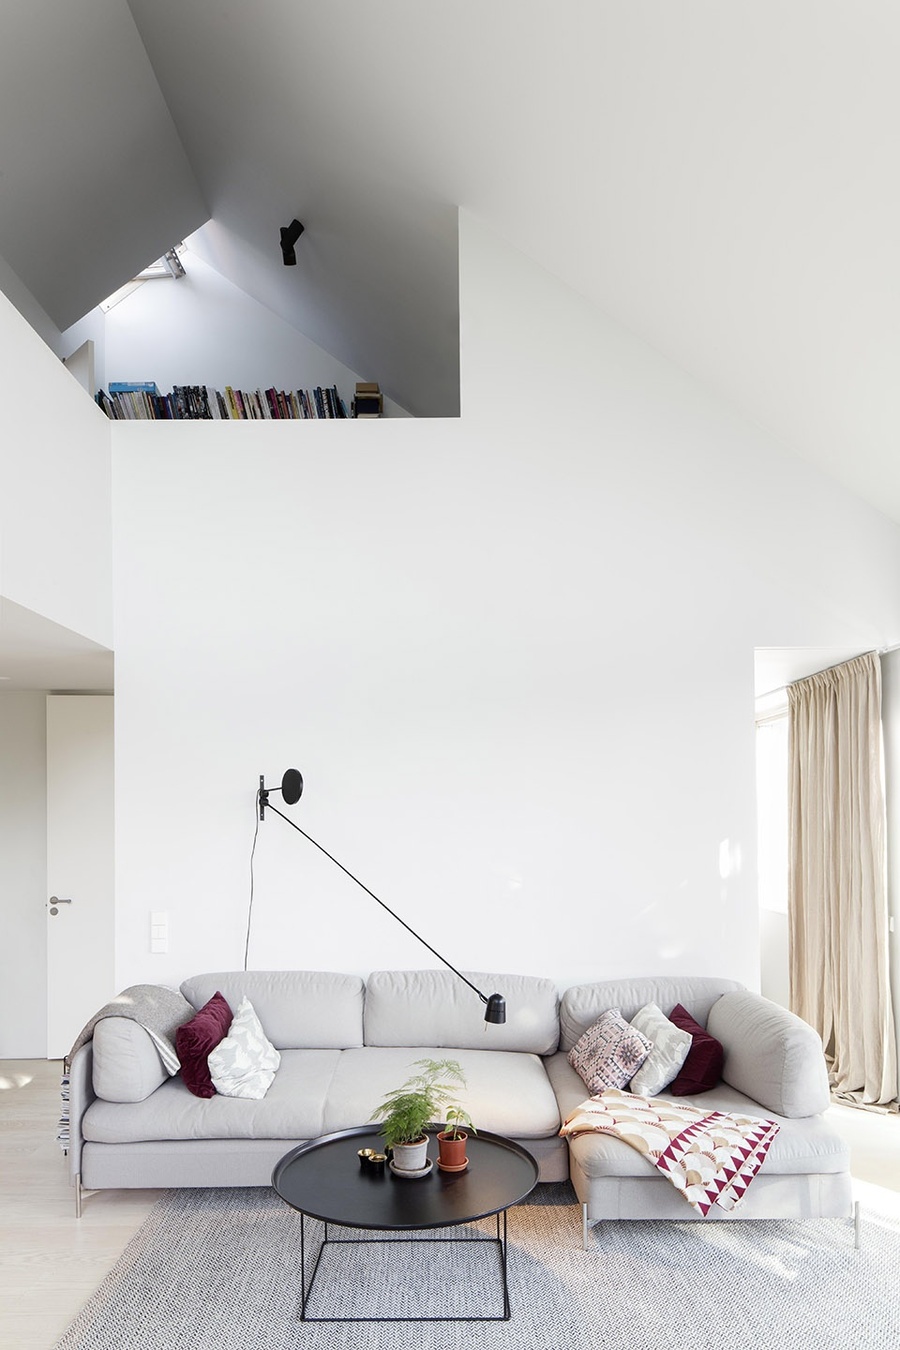 002 Villa Timmerman by Bornstein Lyckefors Architects 960x1440 cc6c8